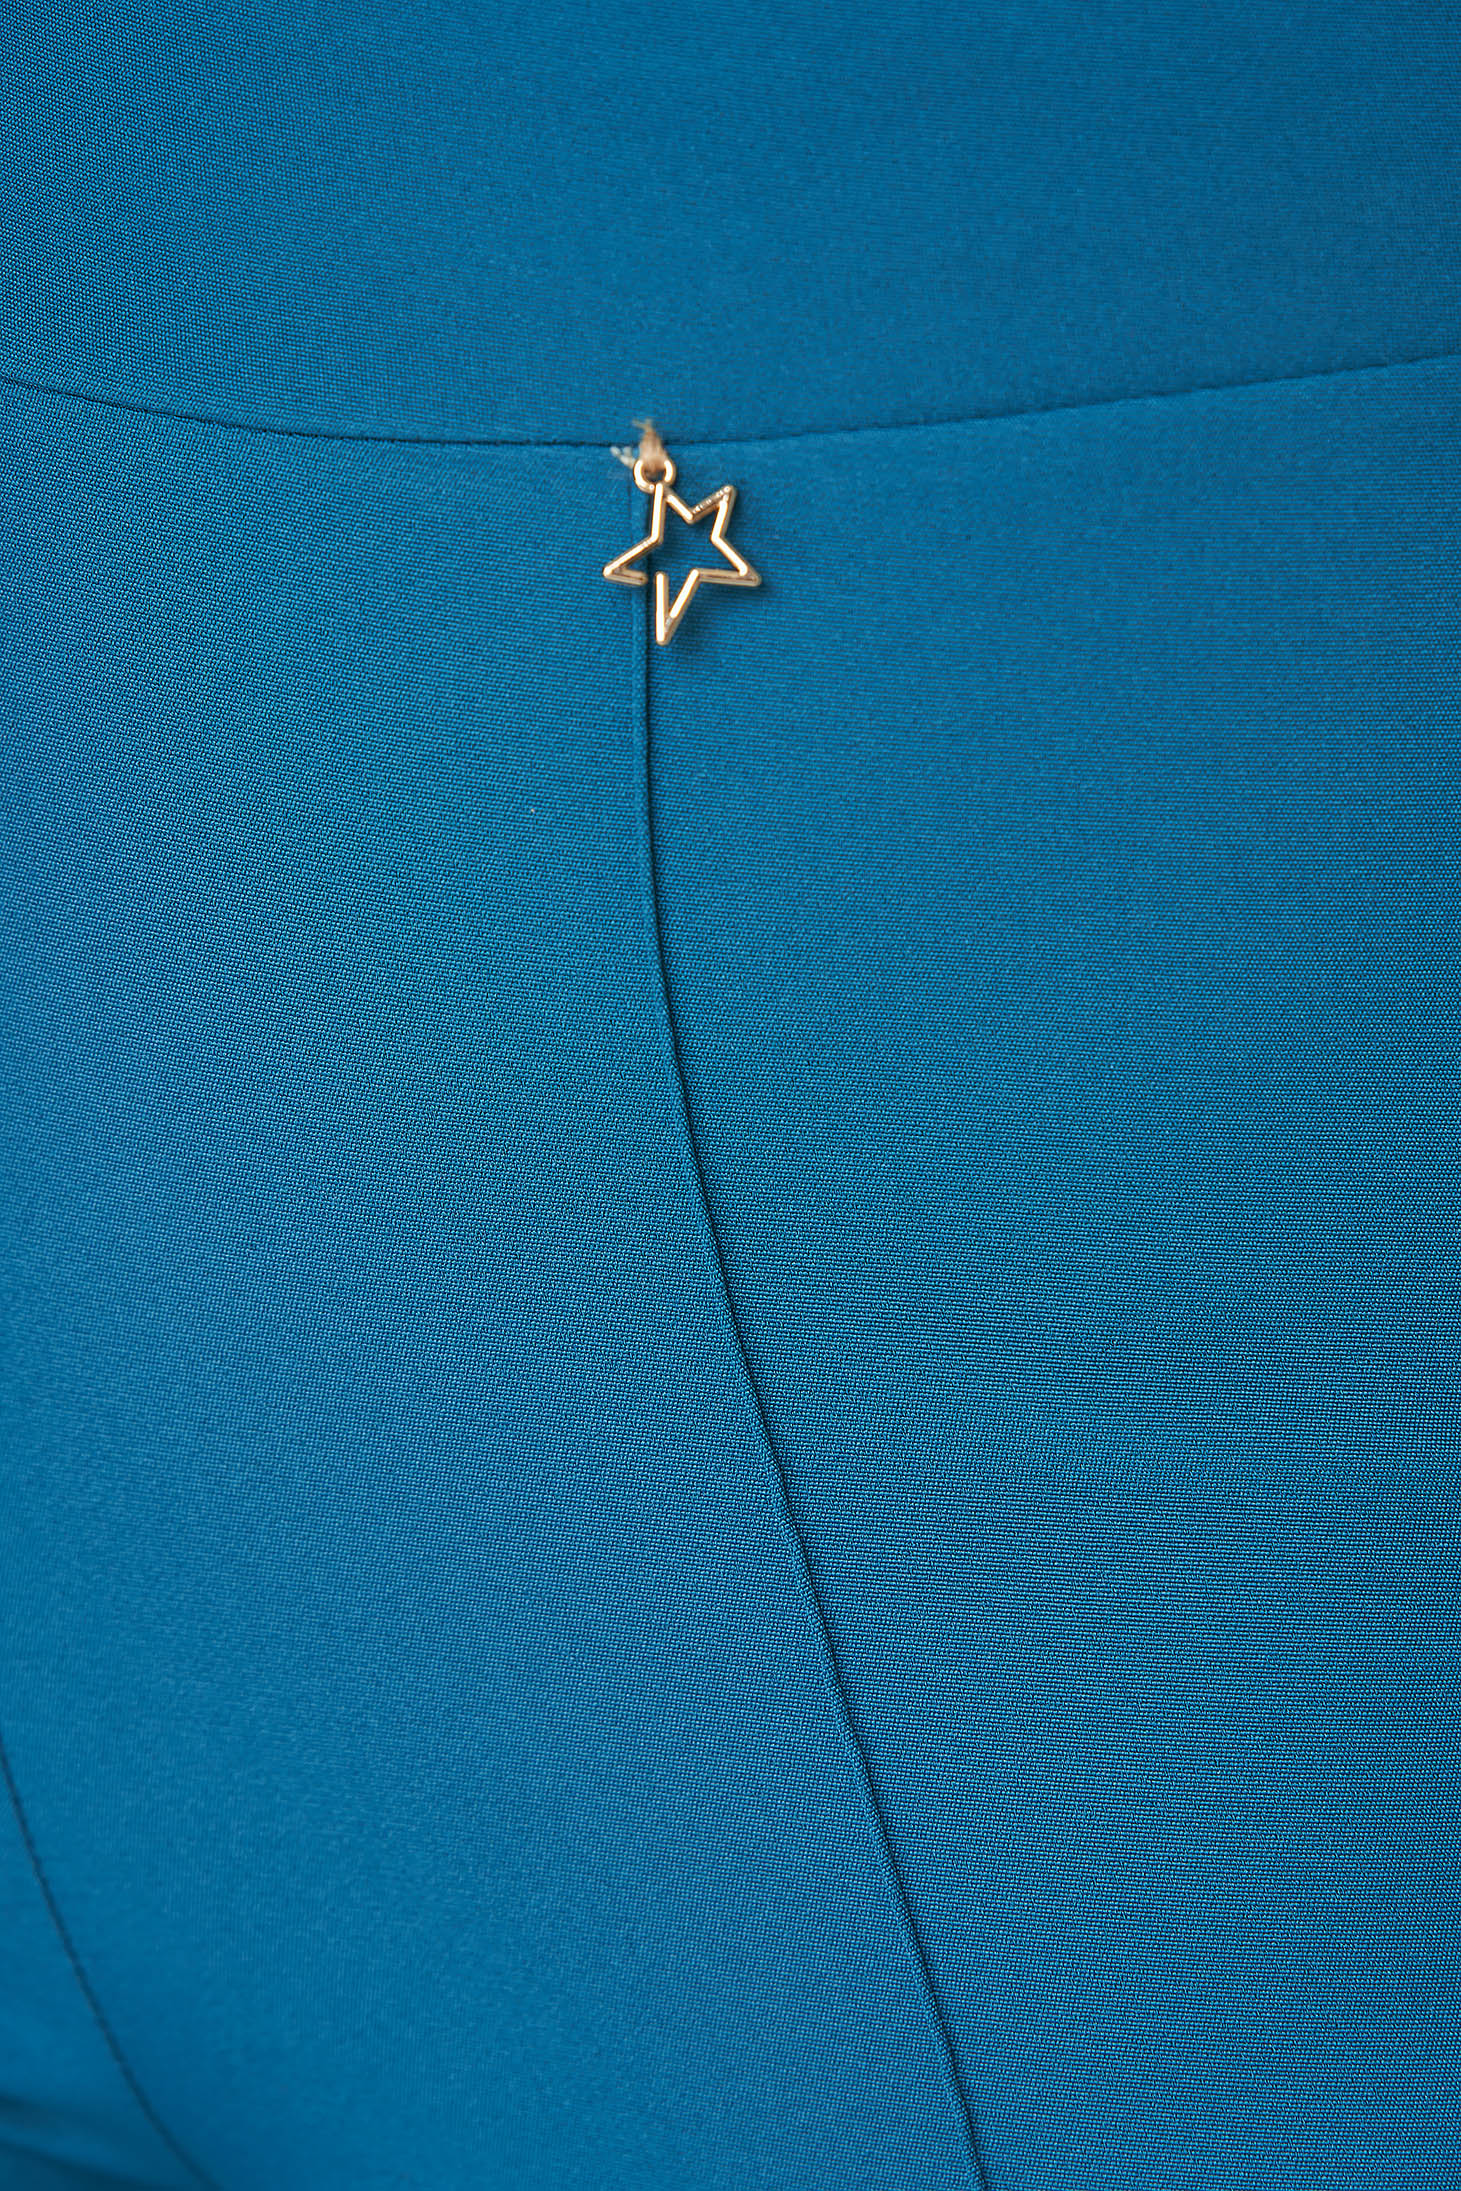 Pantaloni din stofa usor elastica verde petrol lungi evazati cu talie inalta - StarShinerS 6 - StarShinerS.ro